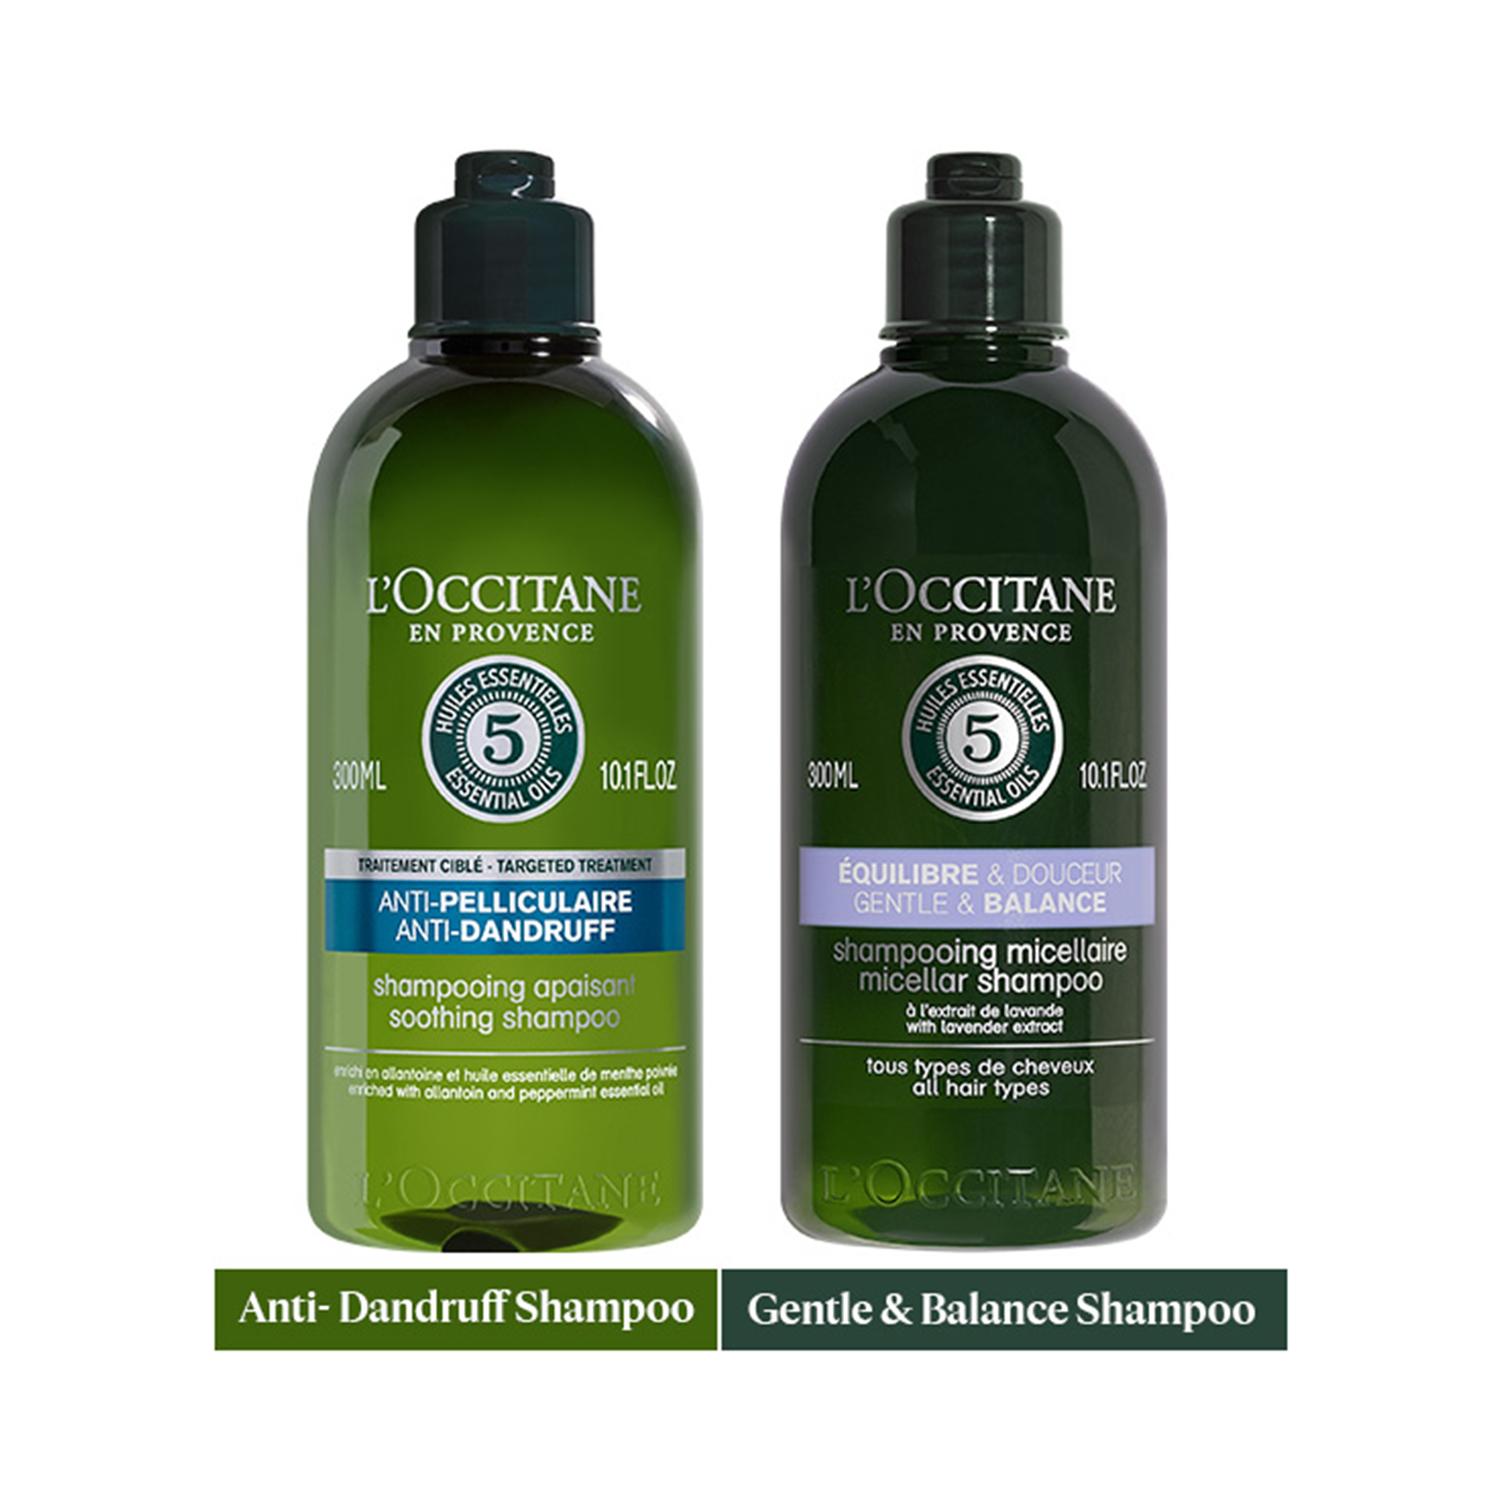 L'occitane | L'Occitane Anti-Dandruff & Gentle Cleansing Shampoo Duo Combo